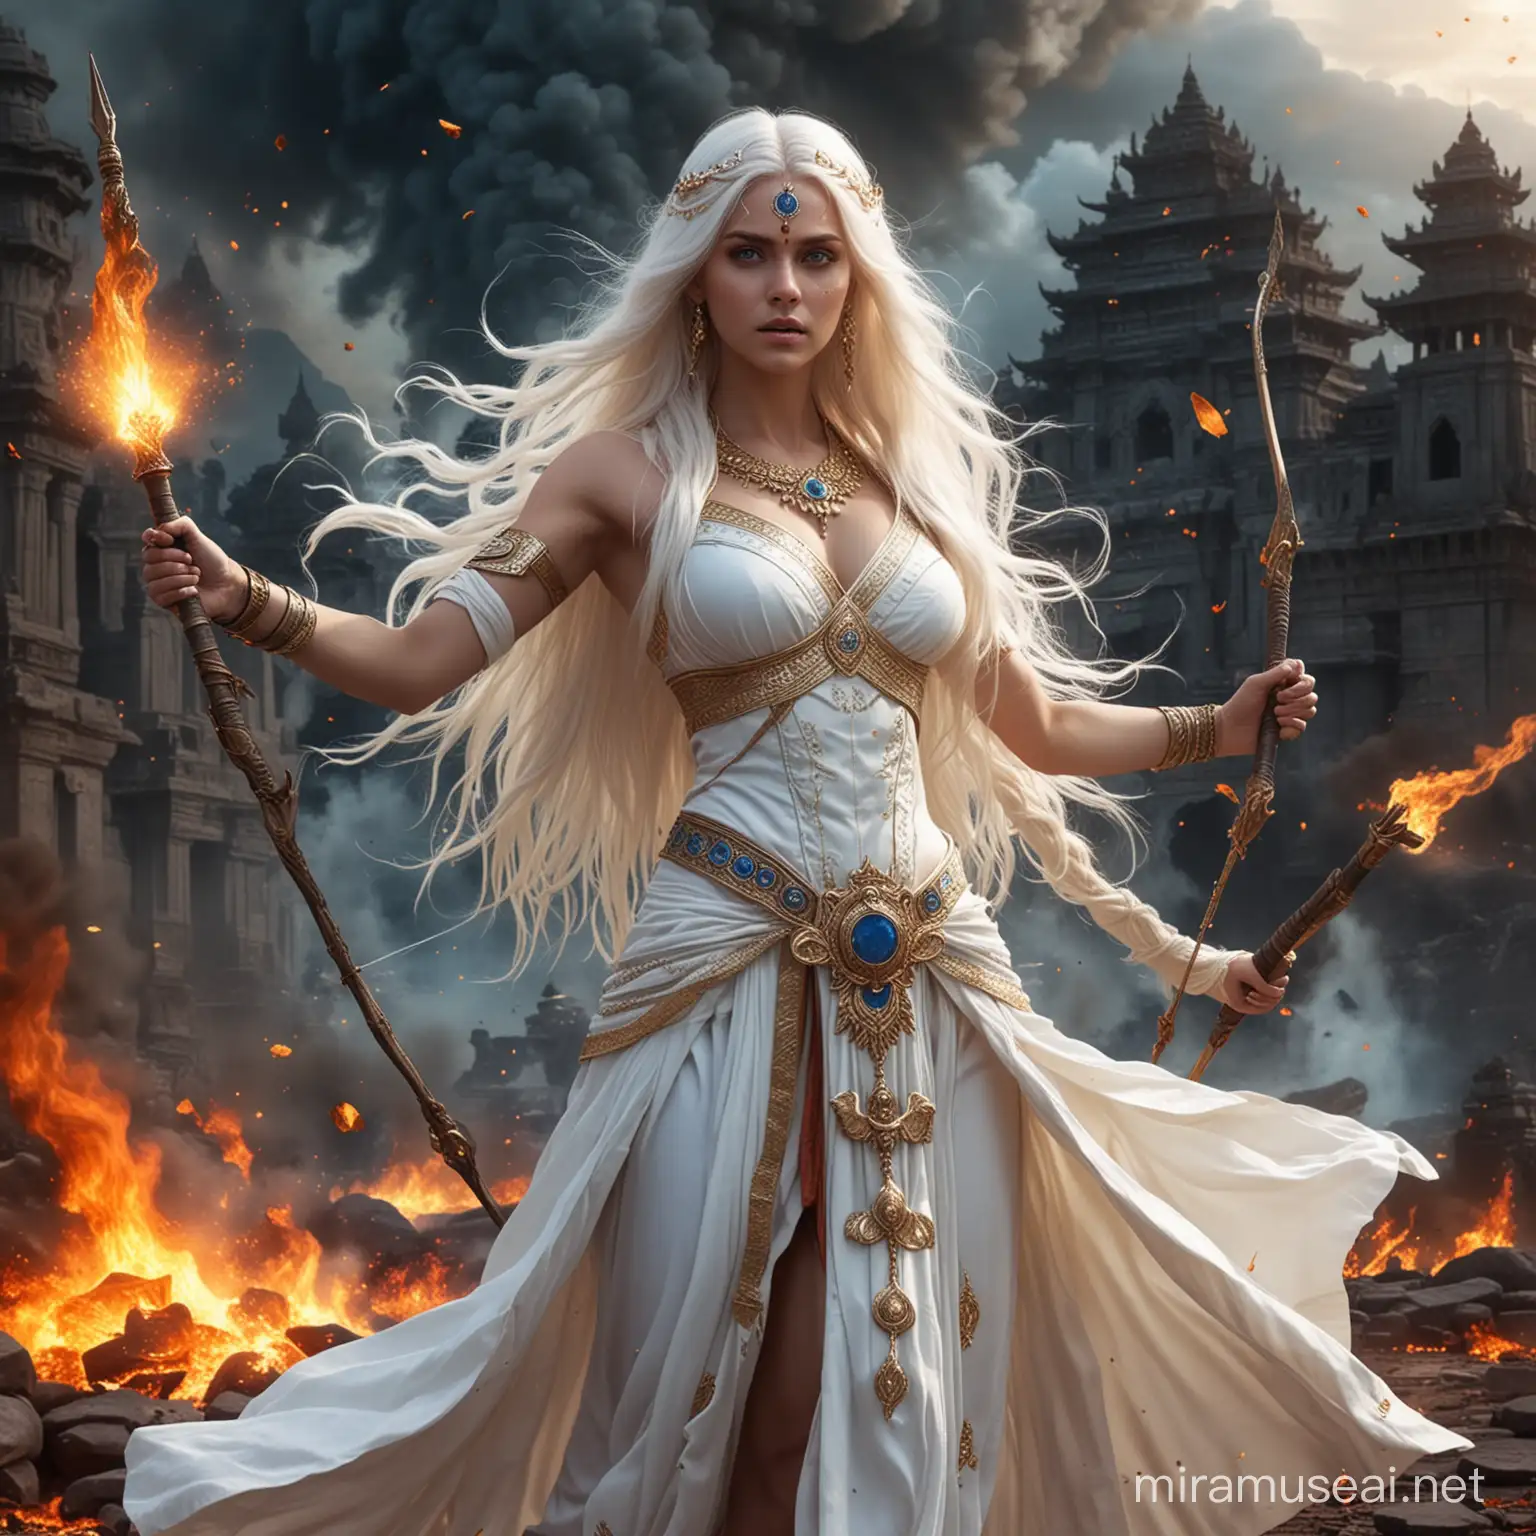 Goddess Empress Young in Combat Throwing Fire Kayashiel Empress